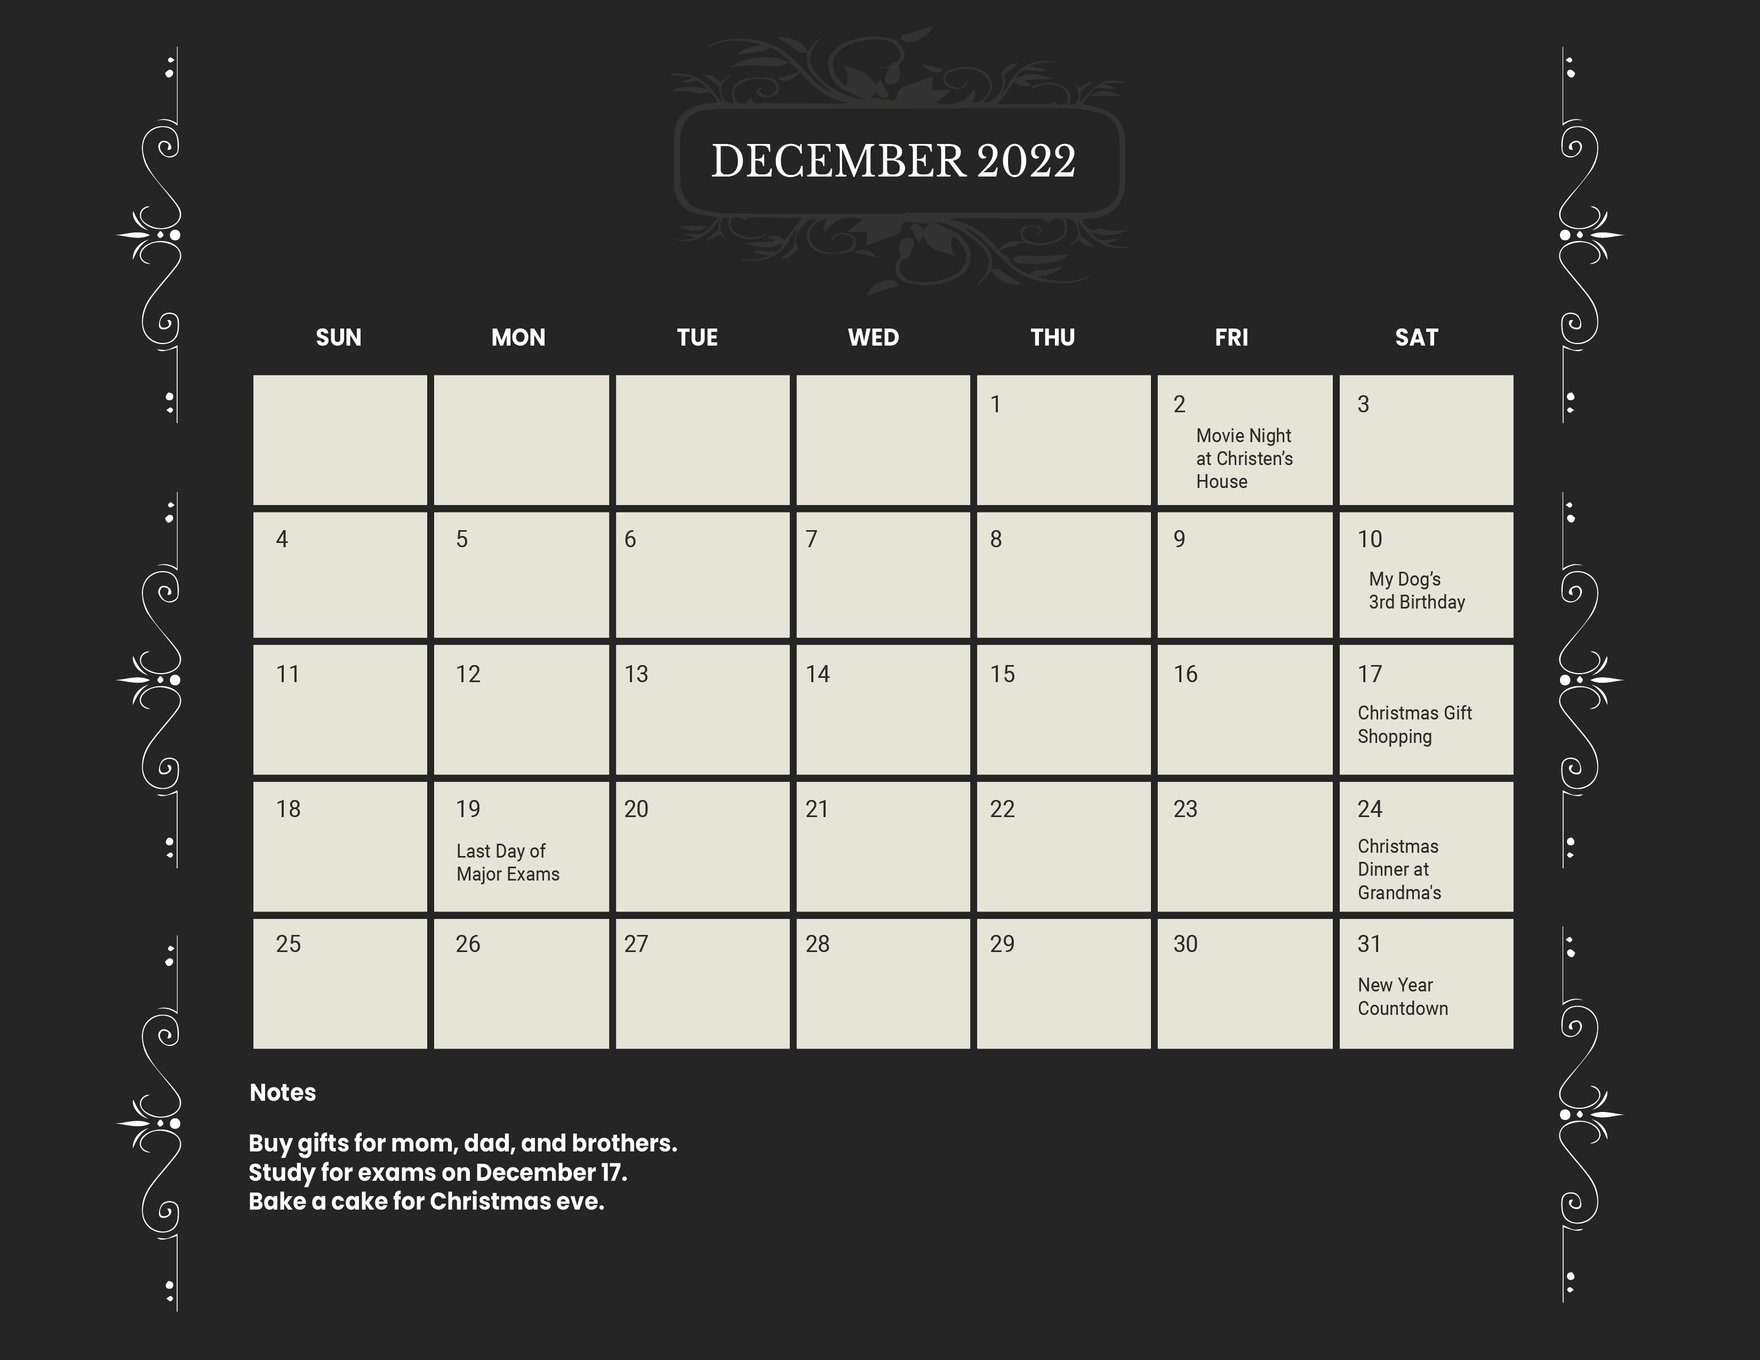 Free Fancy December 2022 Calendar in Word, Illustrator, PSD